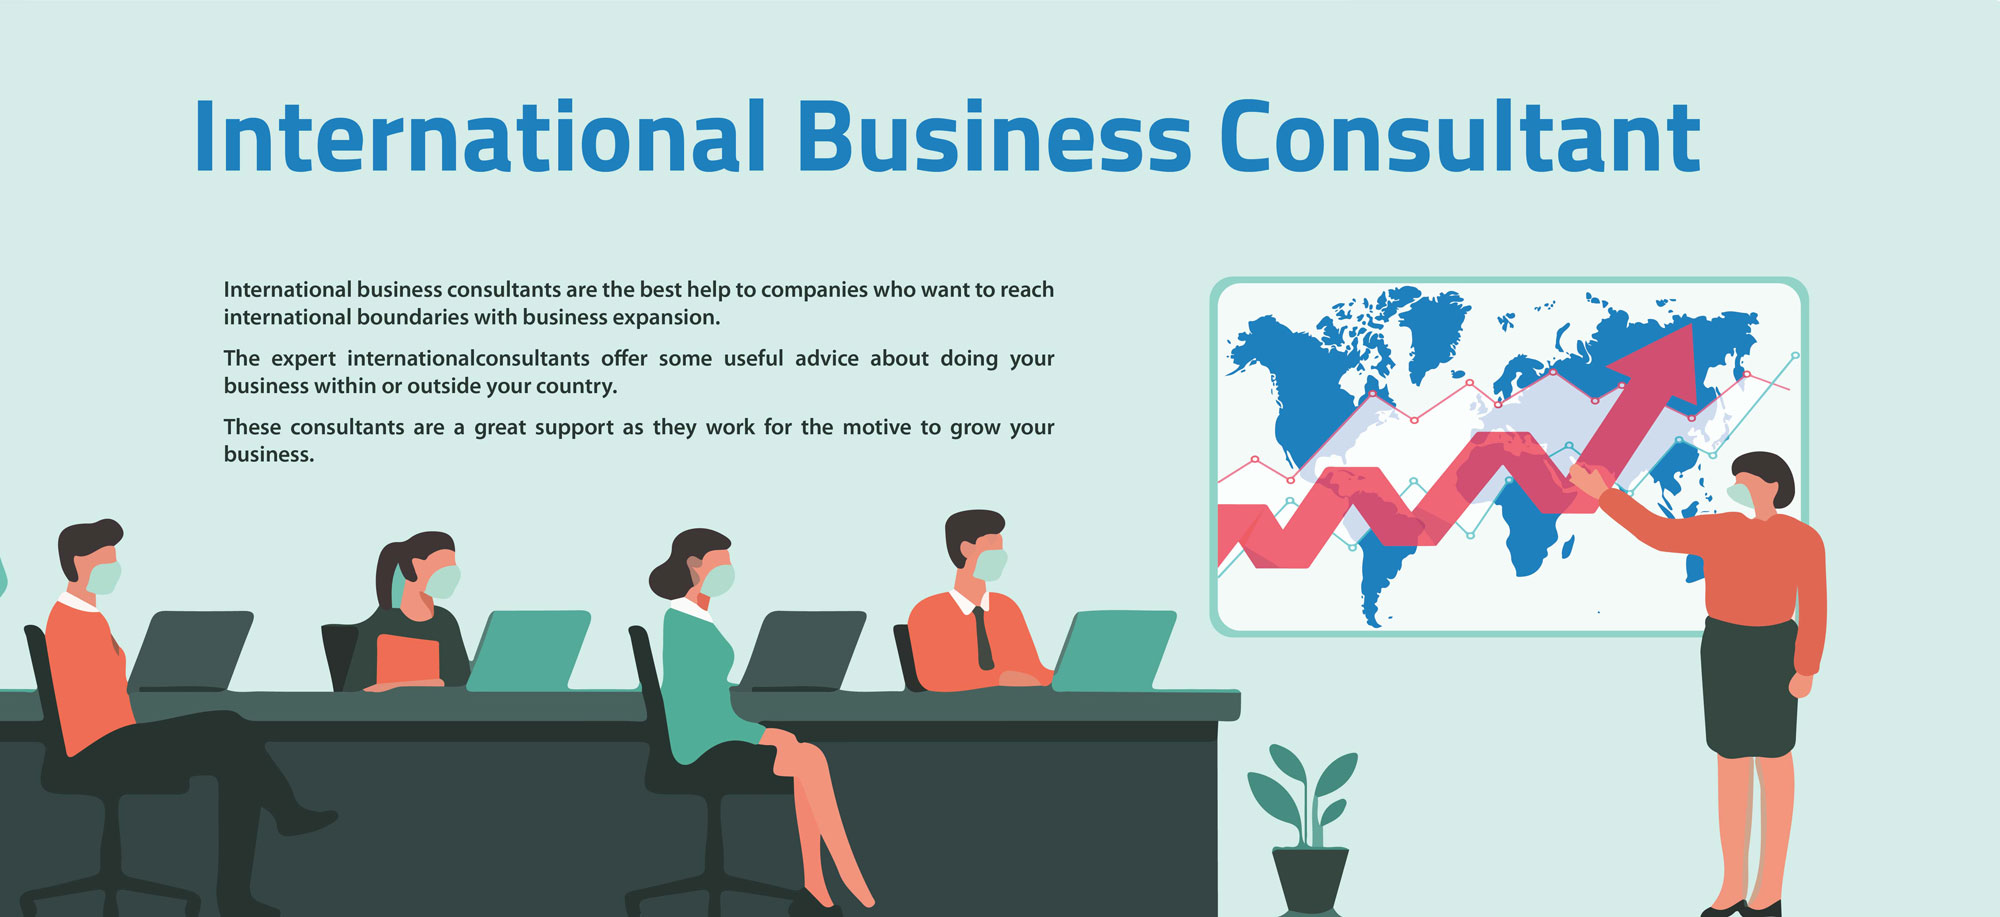 1634531702 International Business Consultant - Business Consultation